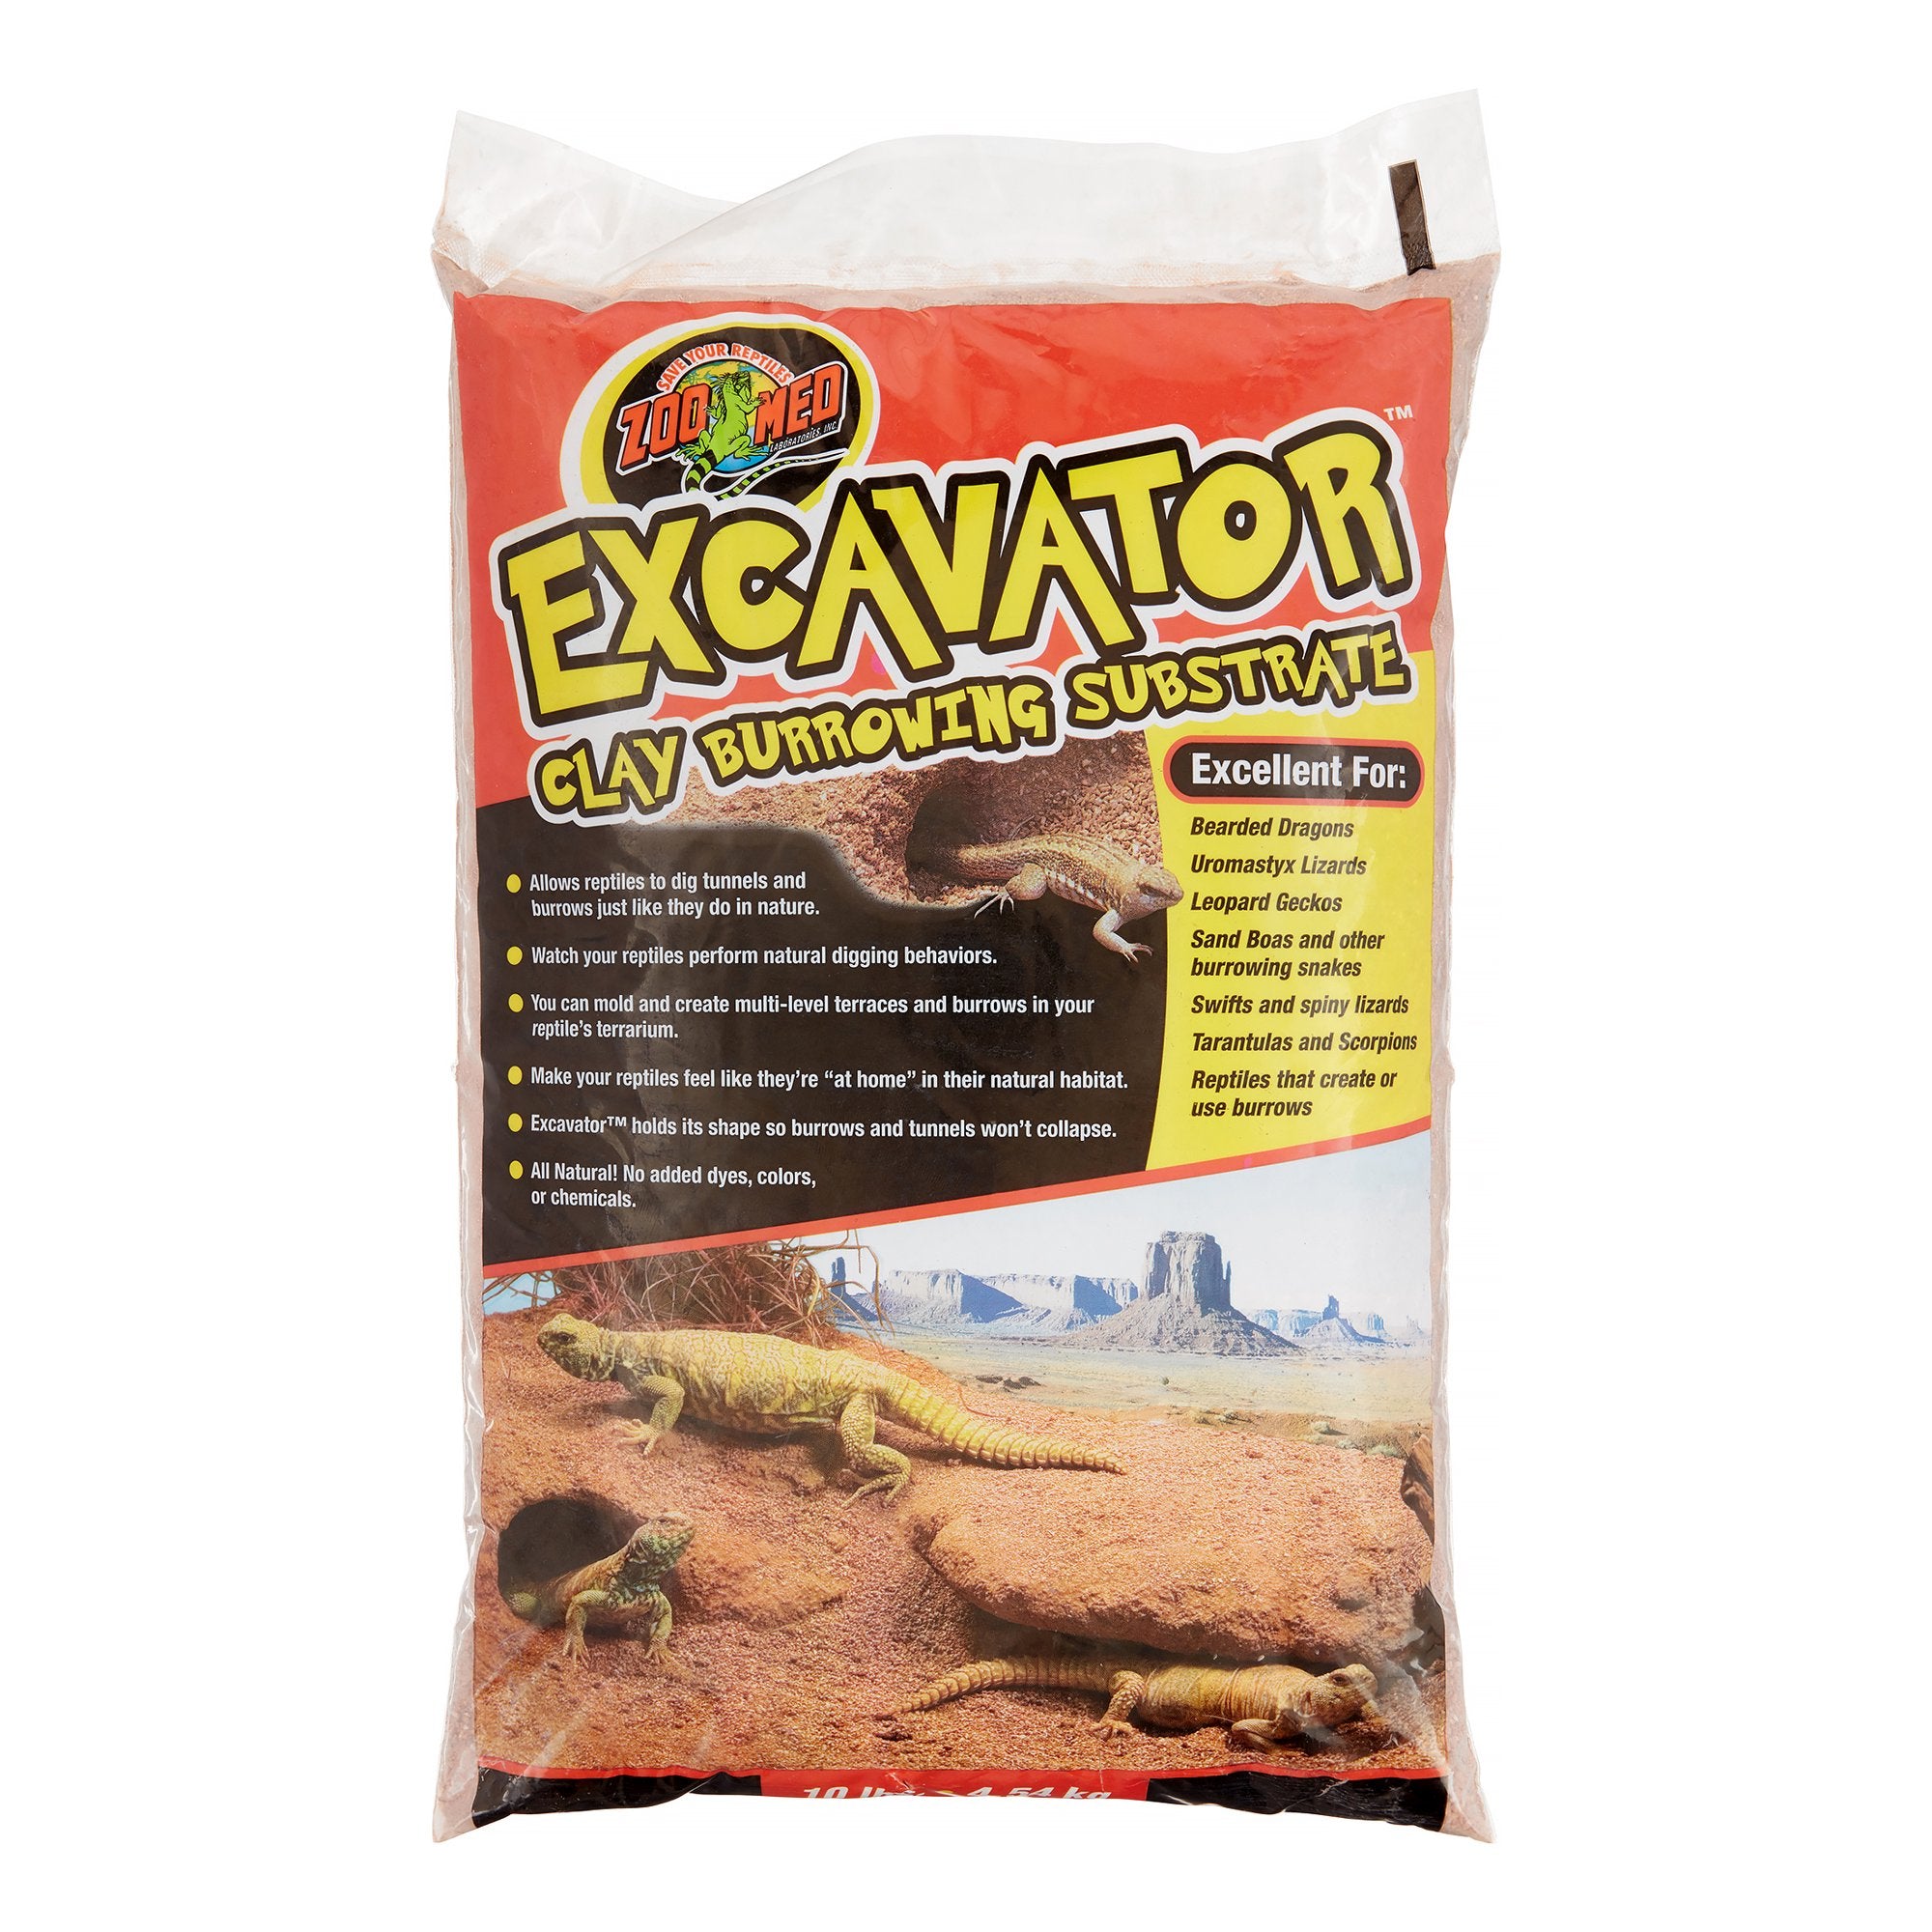  Pet Supply Zoomed Excavator Clay Burrow Substrate 10 lb. : Pet  Habitat Bedding : Pet Supplies